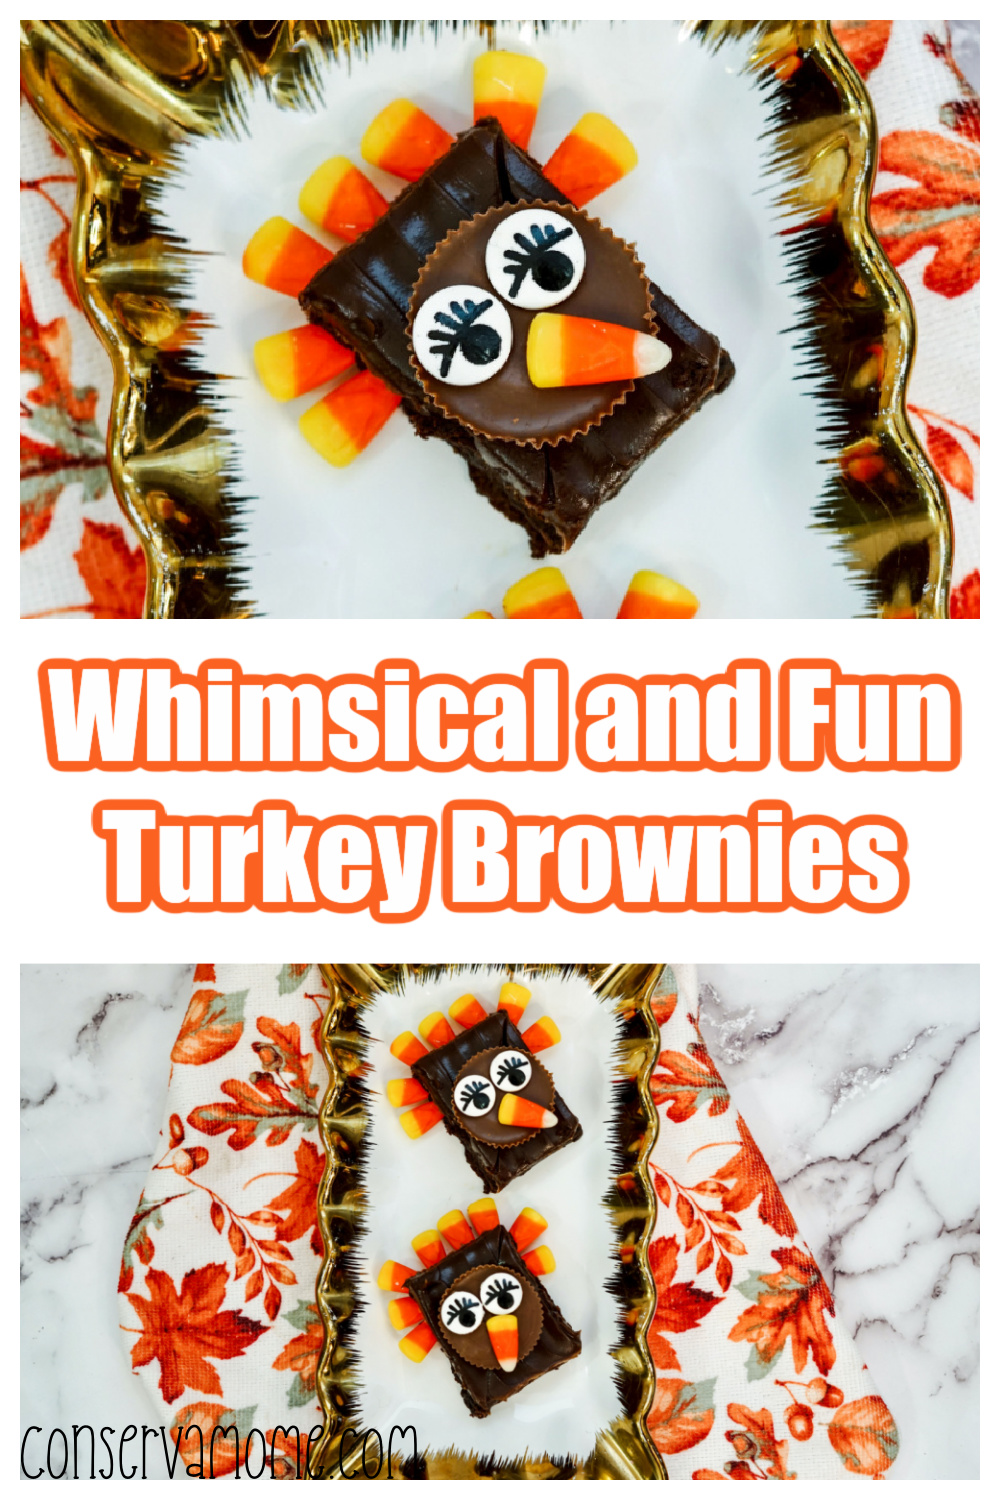 Whimsical and Fun Turkey Brownies